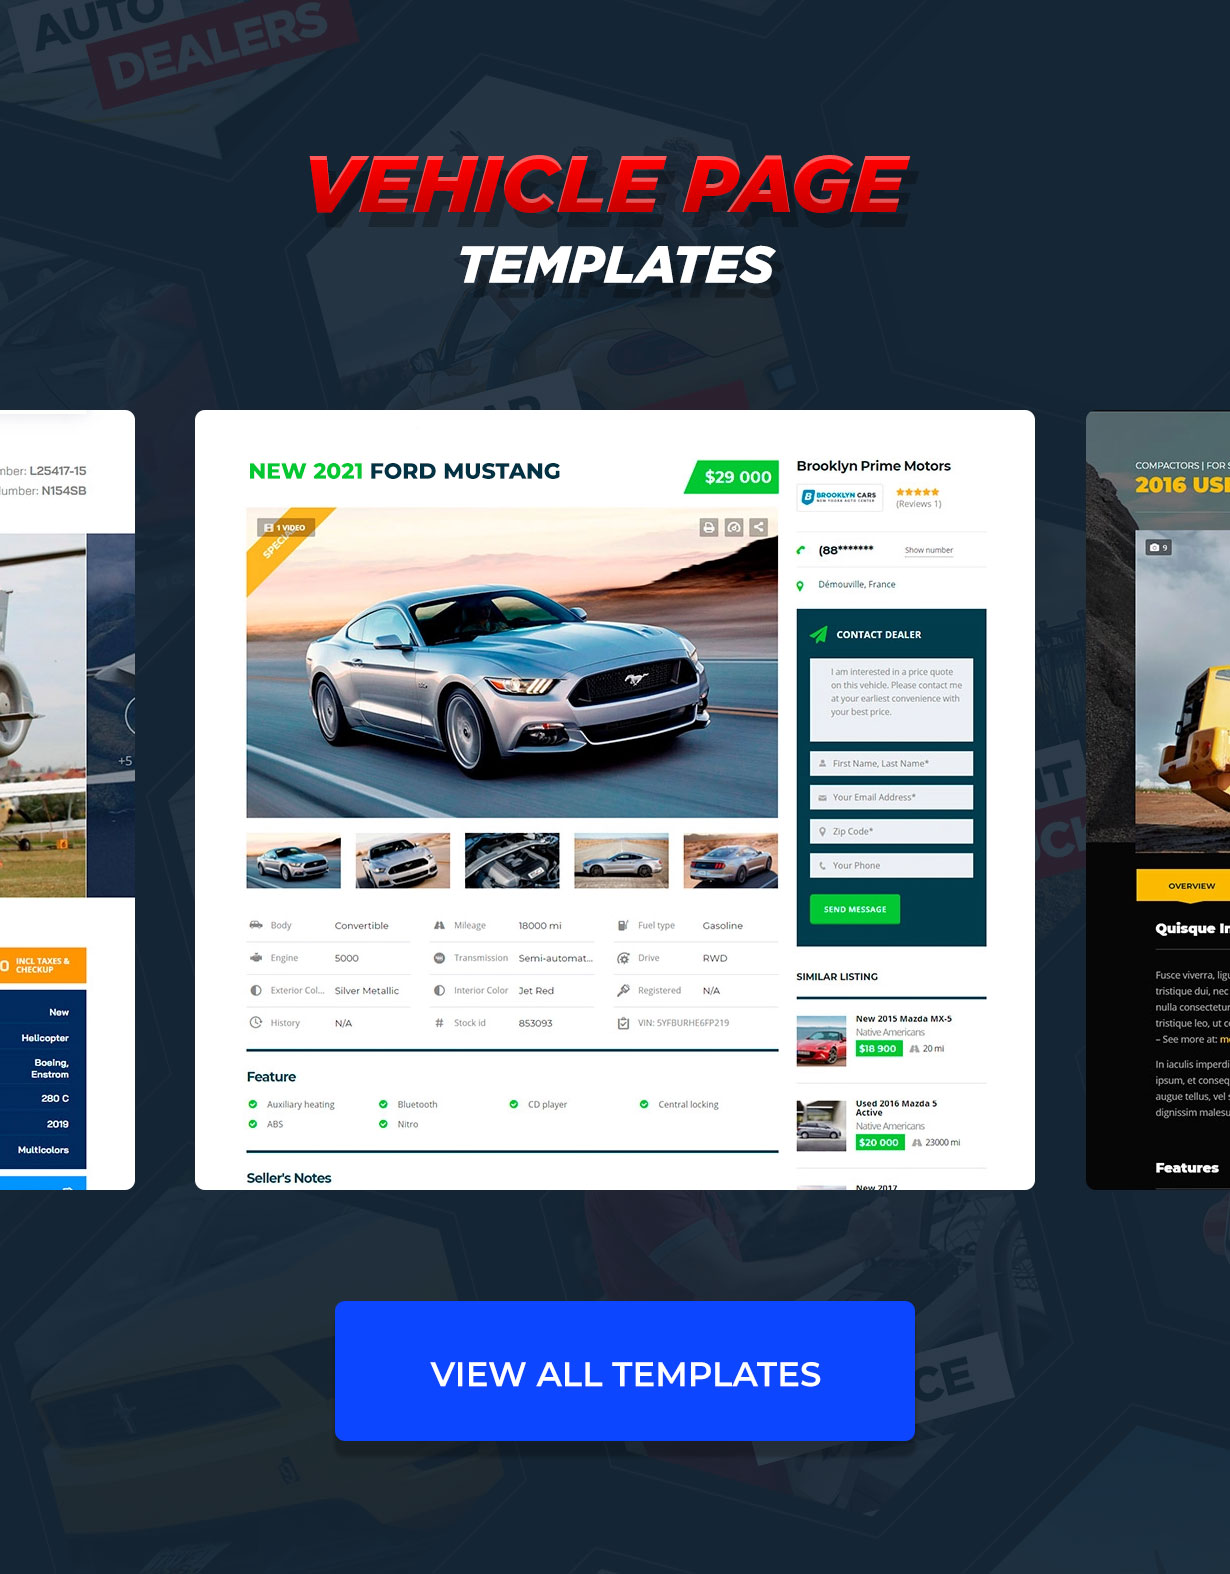 Motors – Car Dealer, Rental & Listing WordPress theme